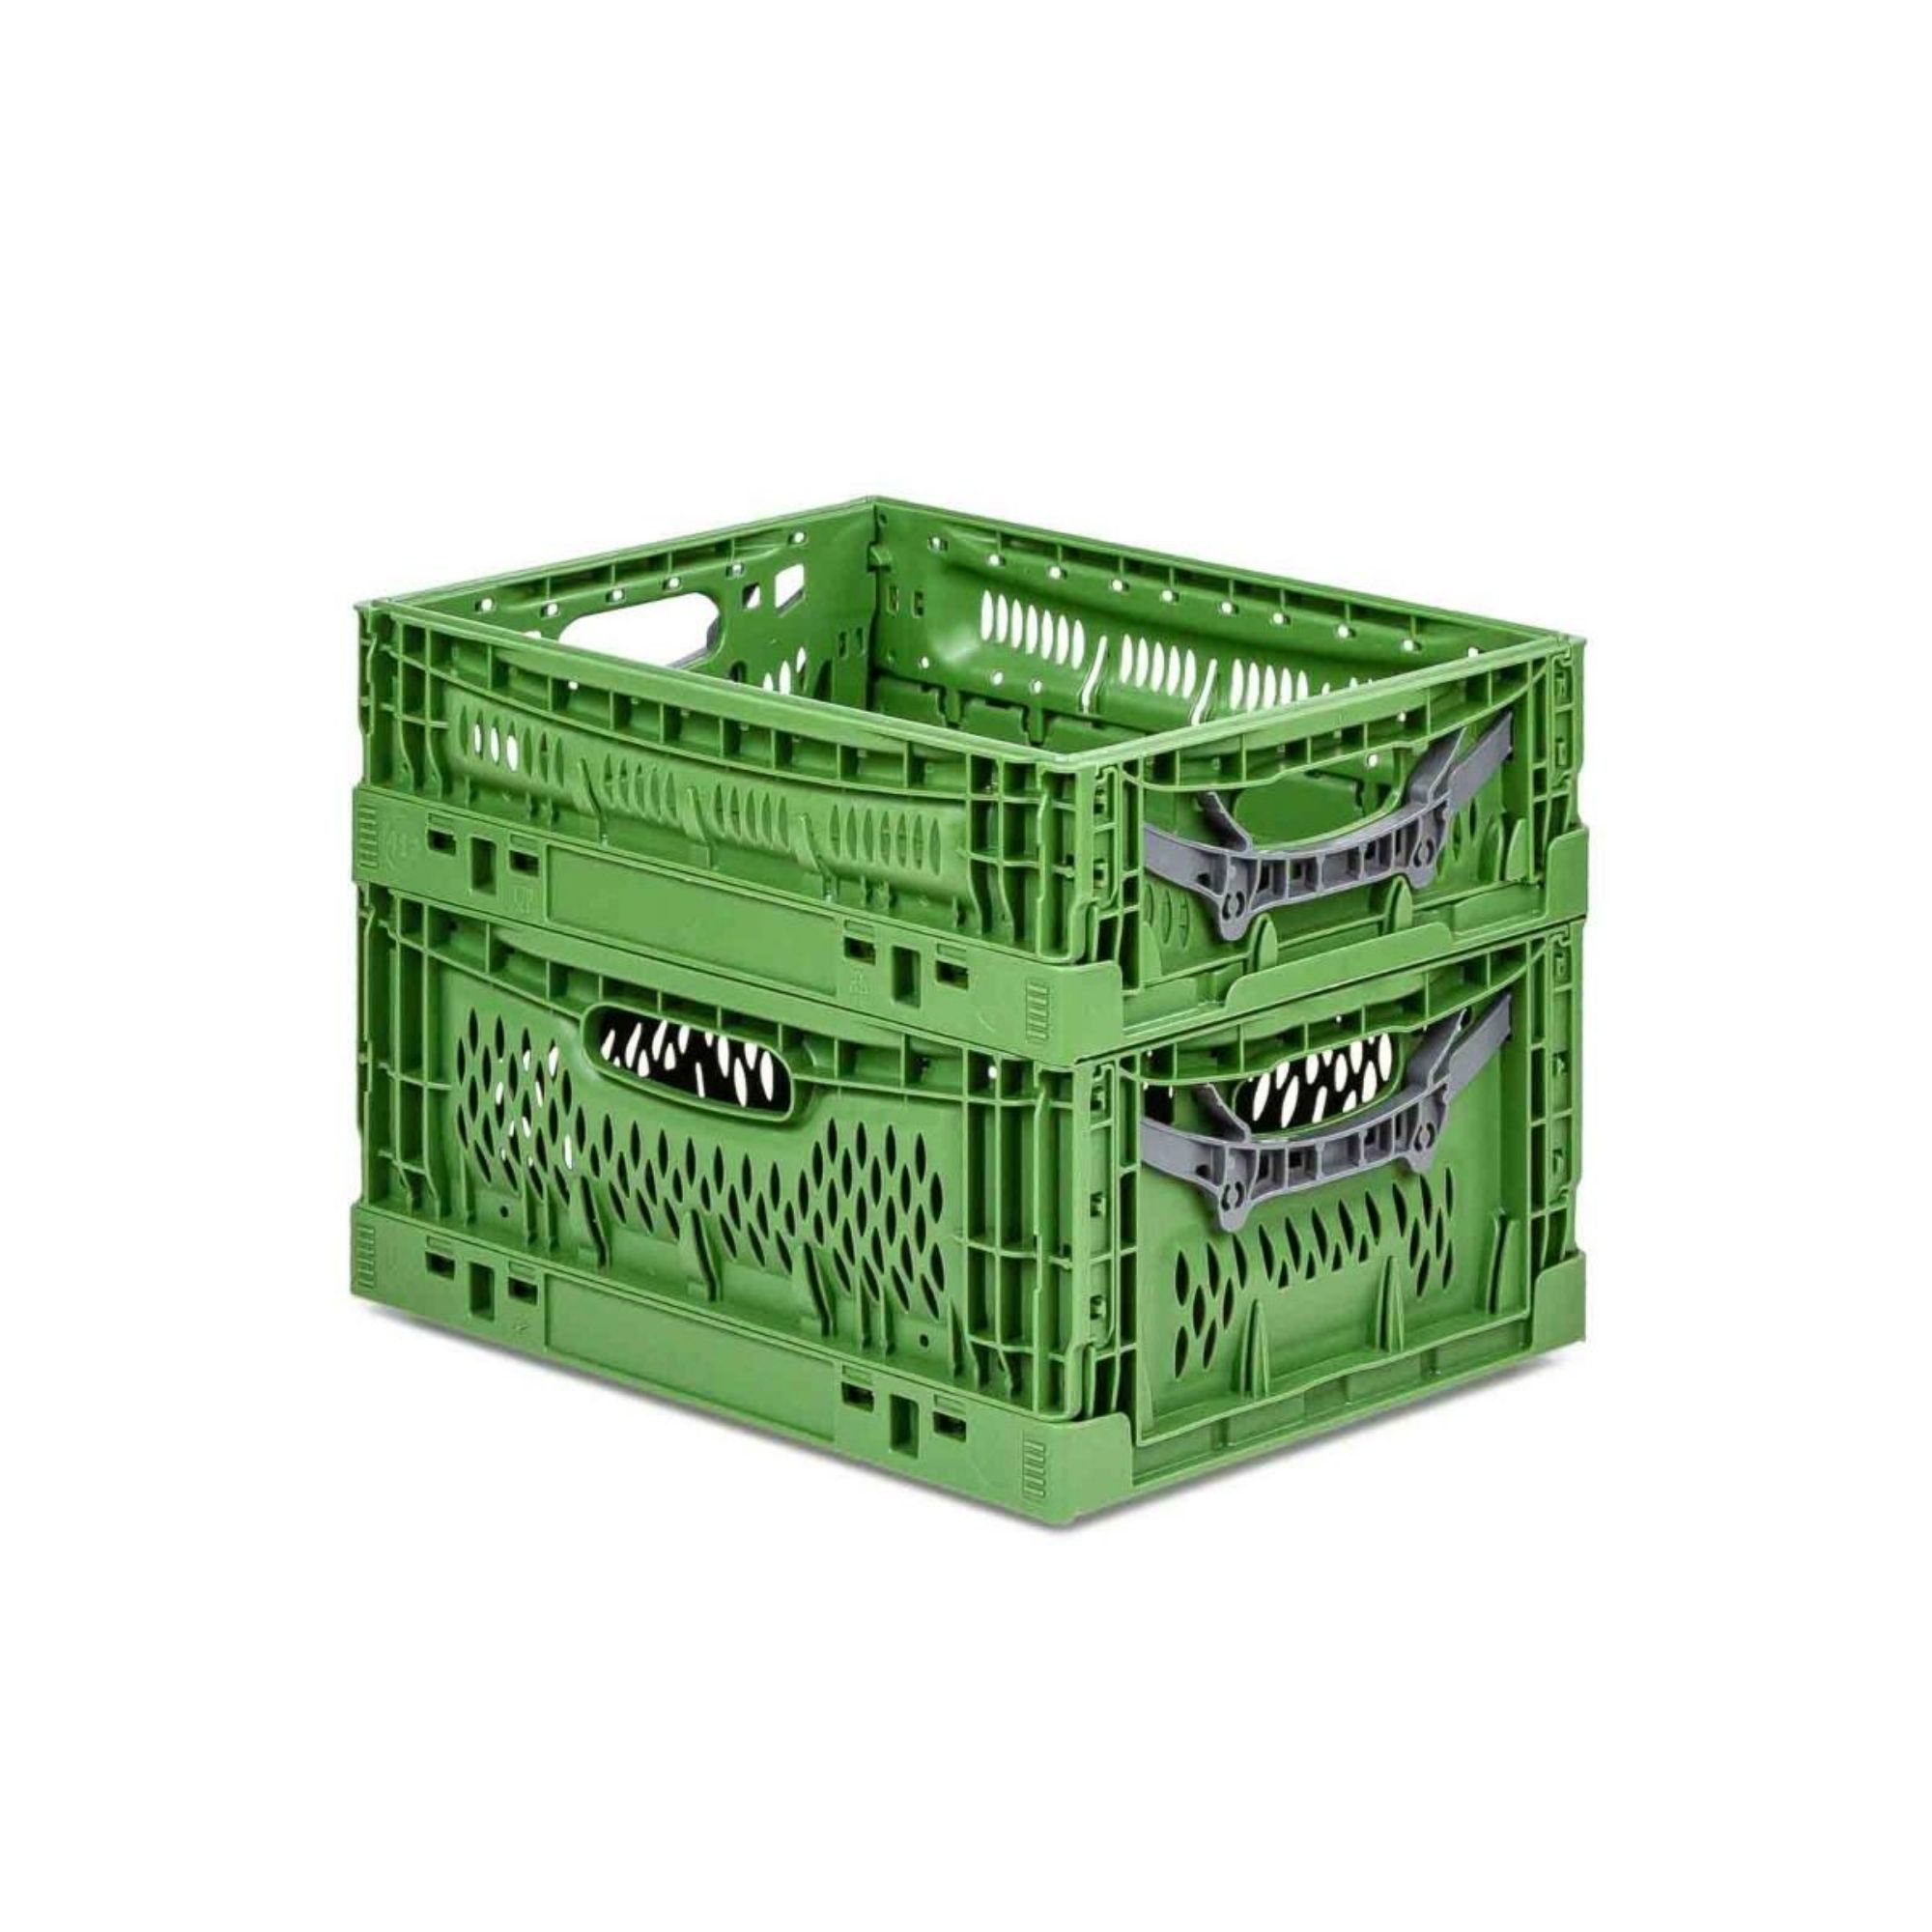 SuperSparSet 20x Stabile Profi-Klappbox Chameleon in Industriequalität | HxBxT 18x30x40cm | 17 Liter | klappbar stapelbar durchbrochen lebensmittelecht | Eurobox Eurobehälter Transportbehälter Stapelbehlter Faltbox